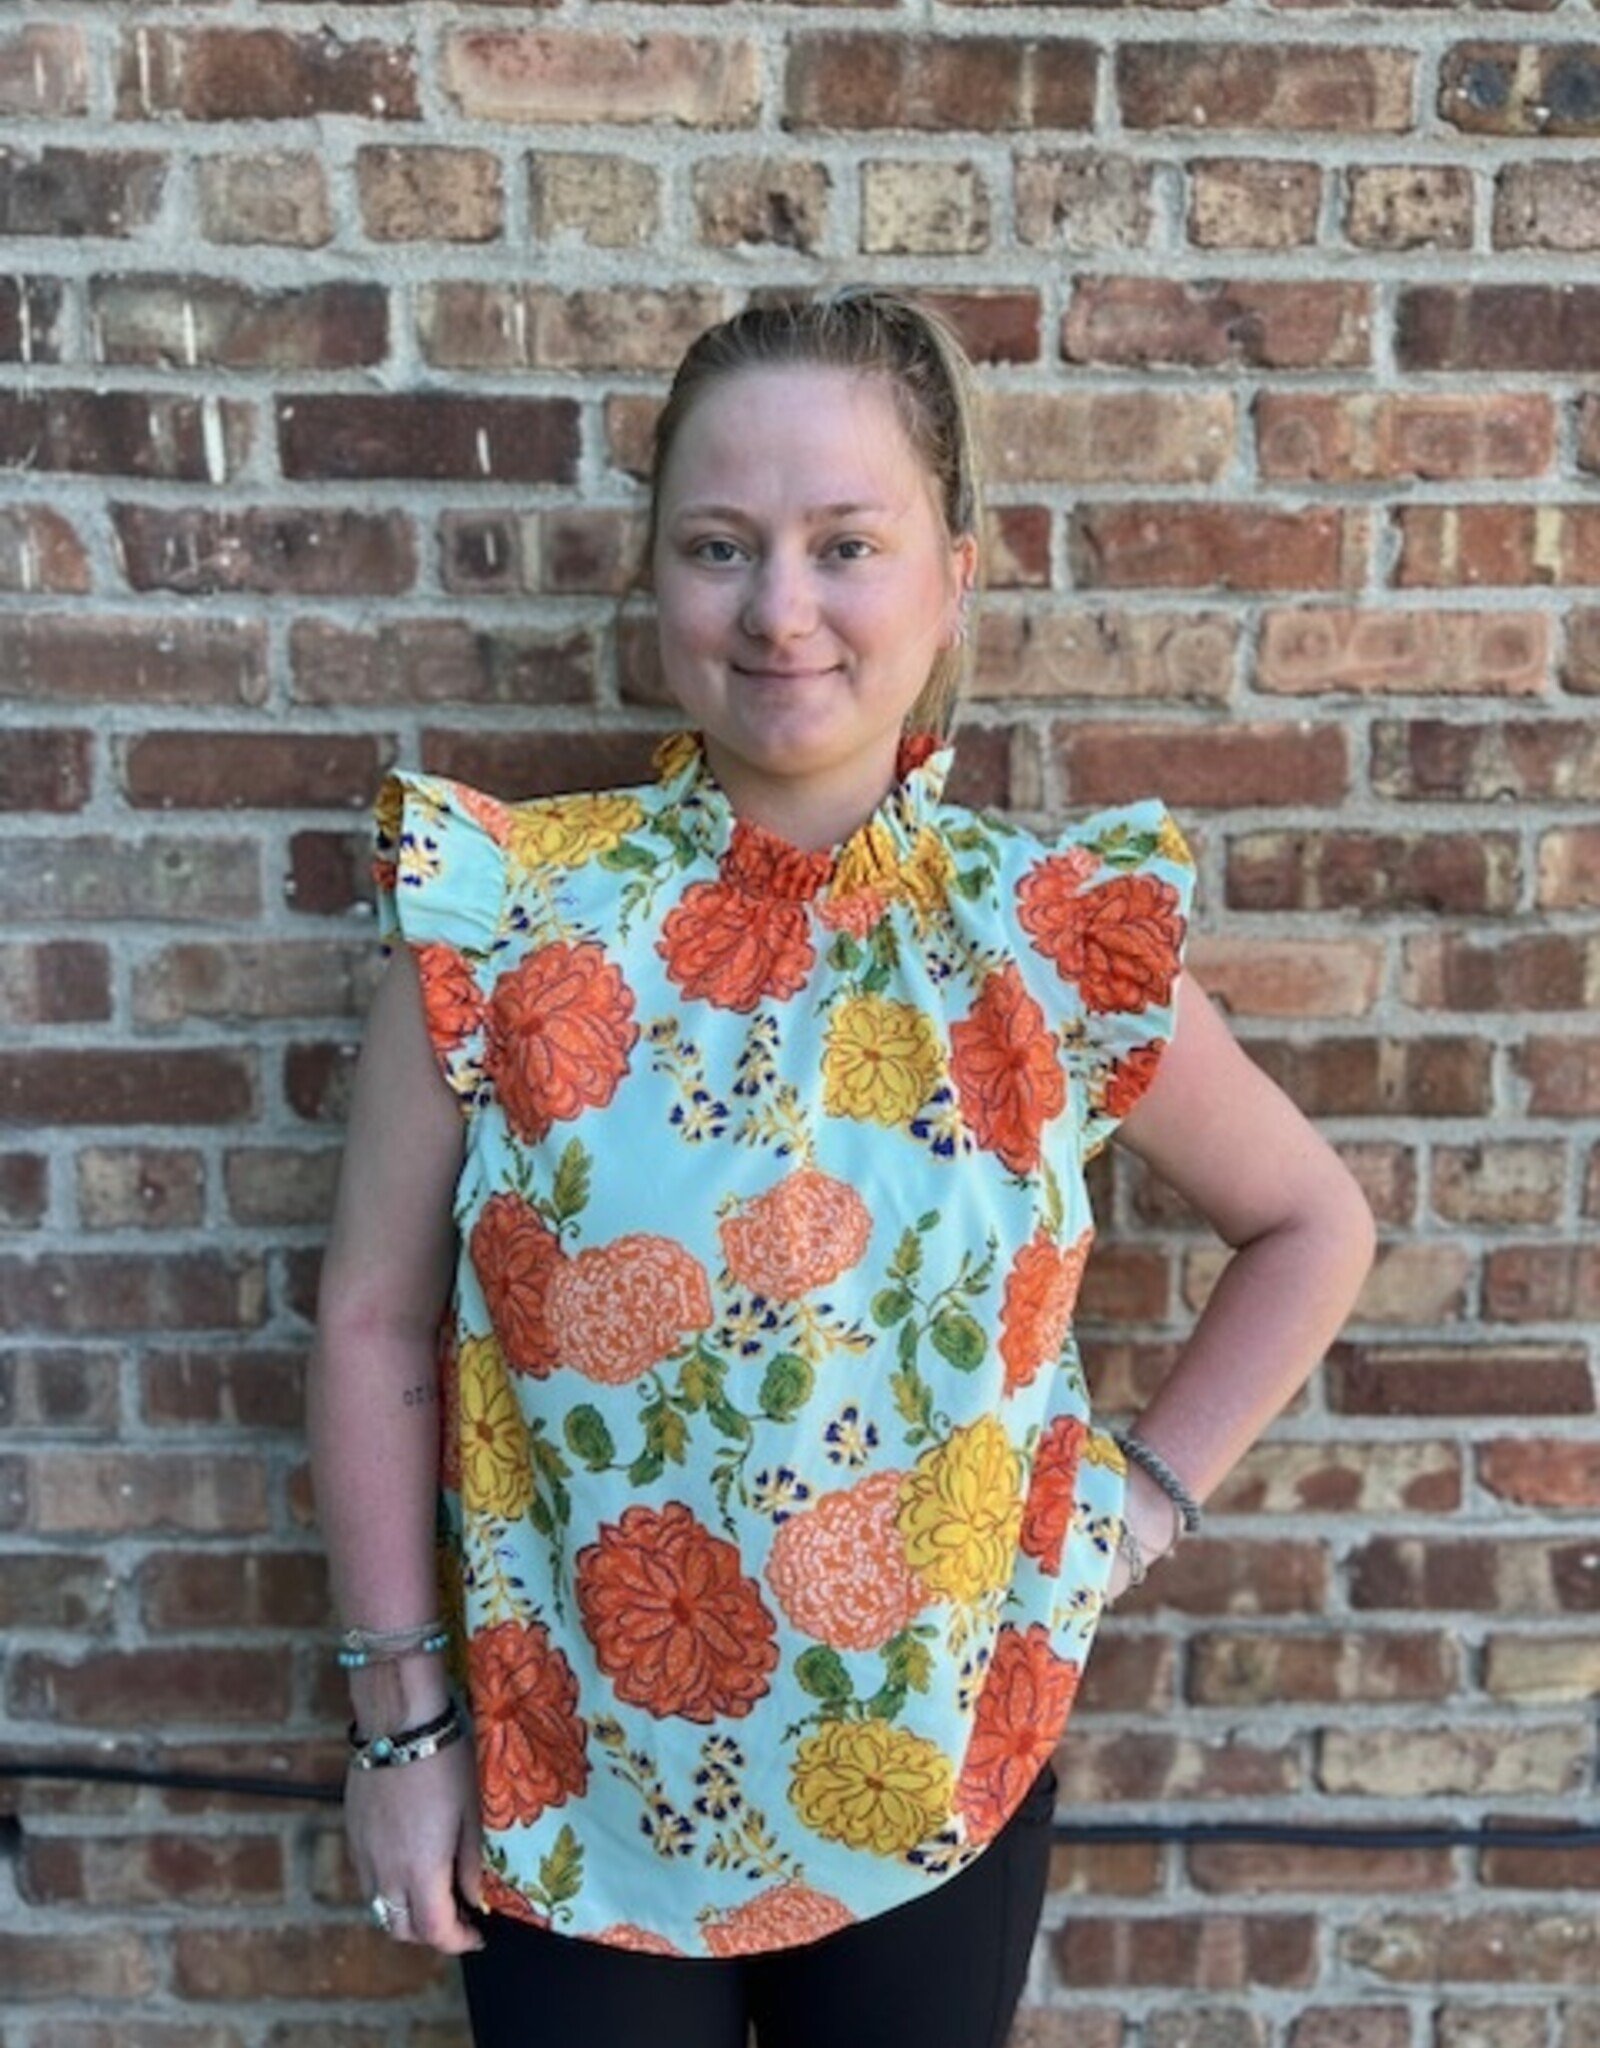 Shirt Hadley Mint Orange Floral Top